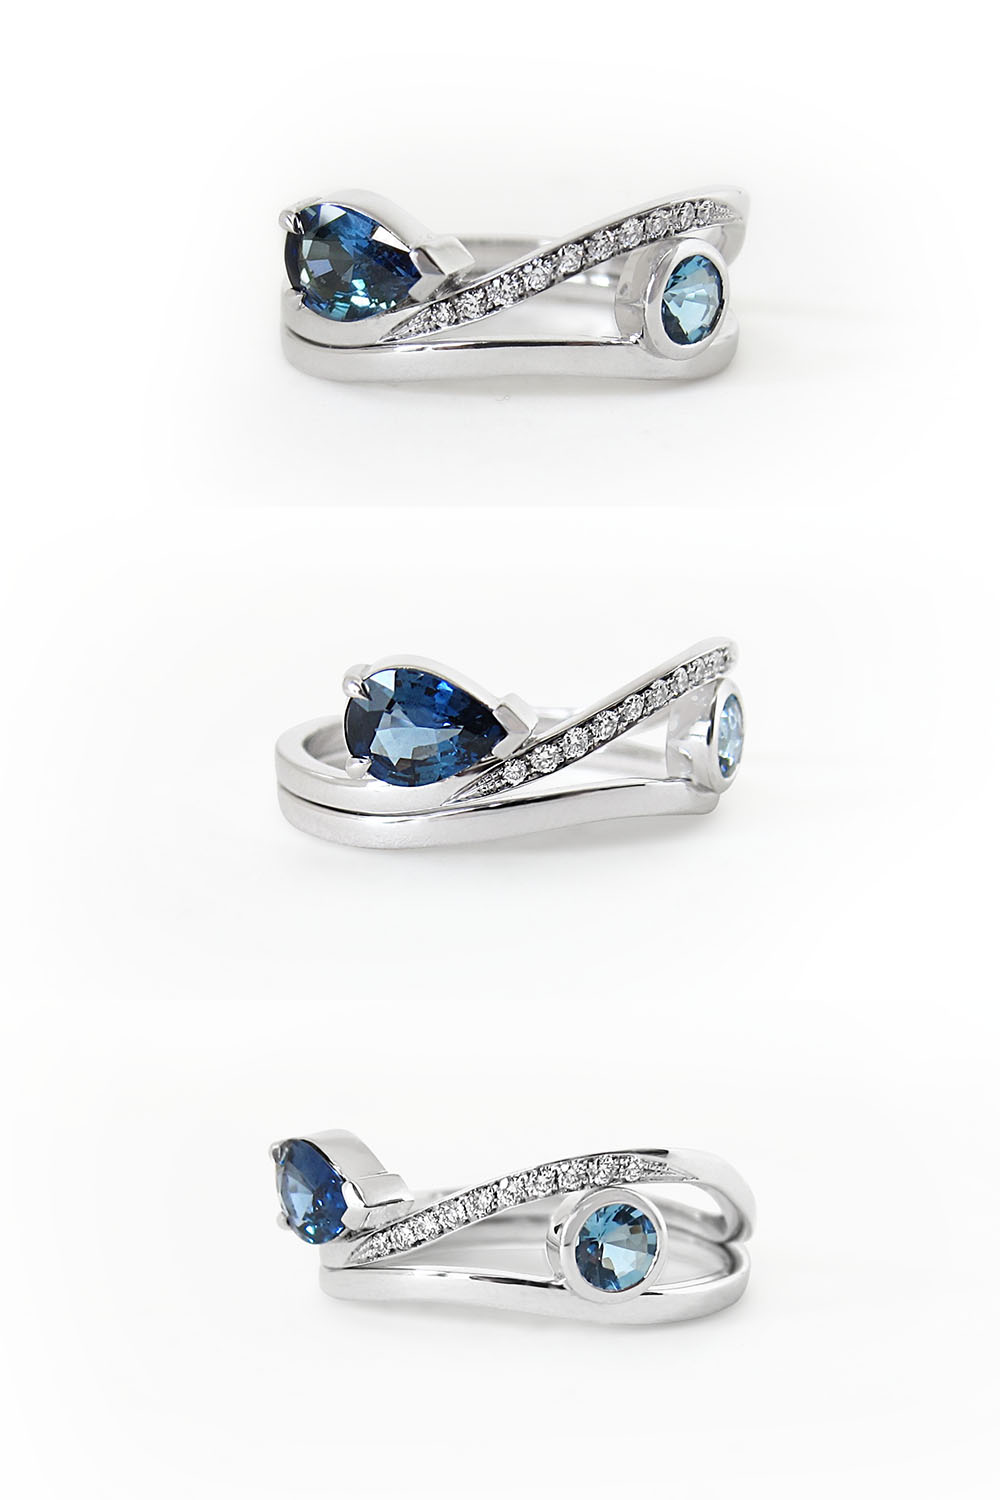 Australian sapphire, aquamarine and diamond wedding ring set